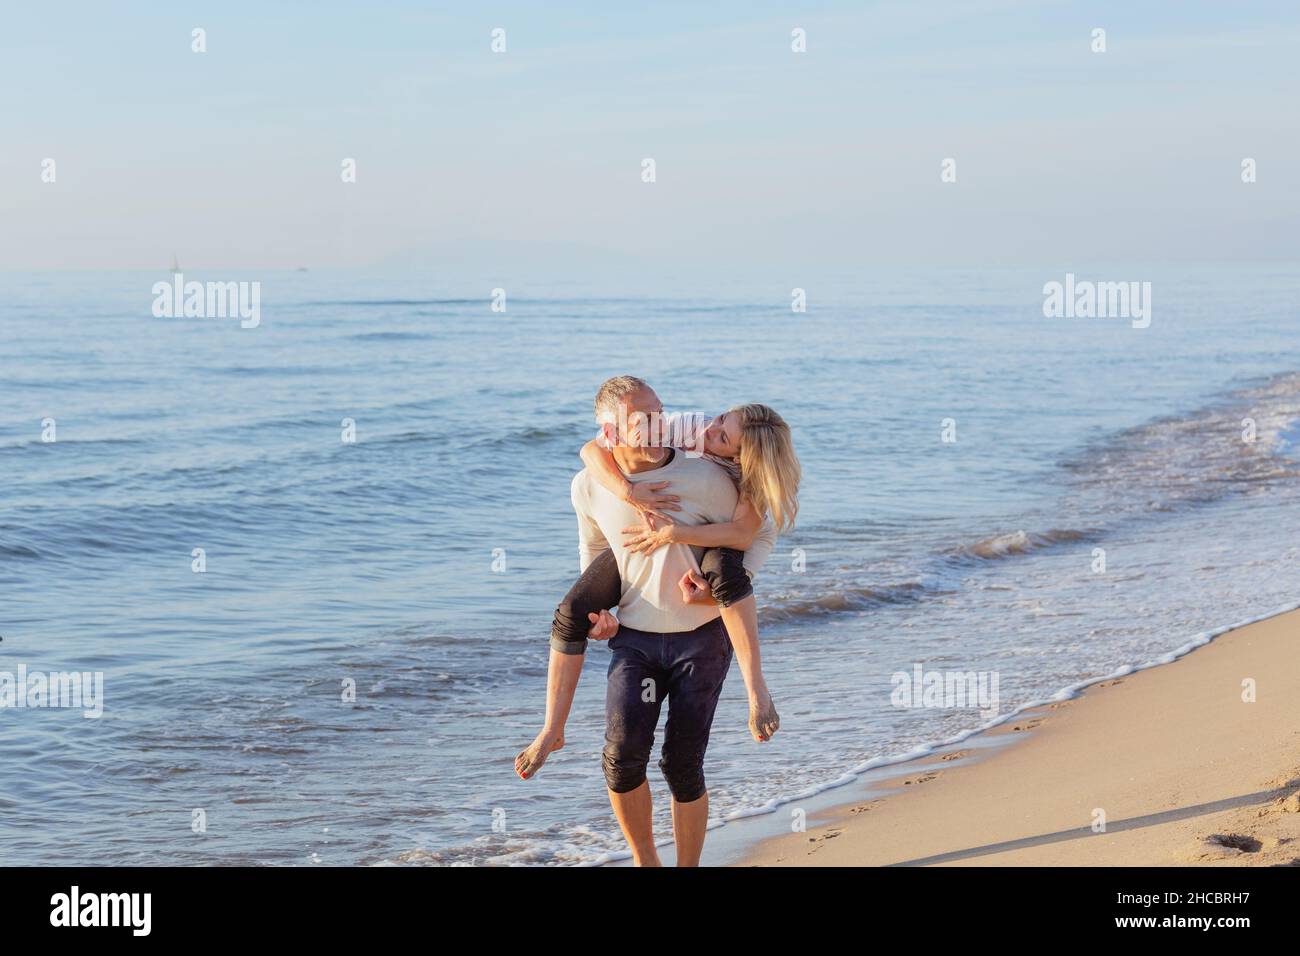 Man piggybacking woman at beach Banque D'Images